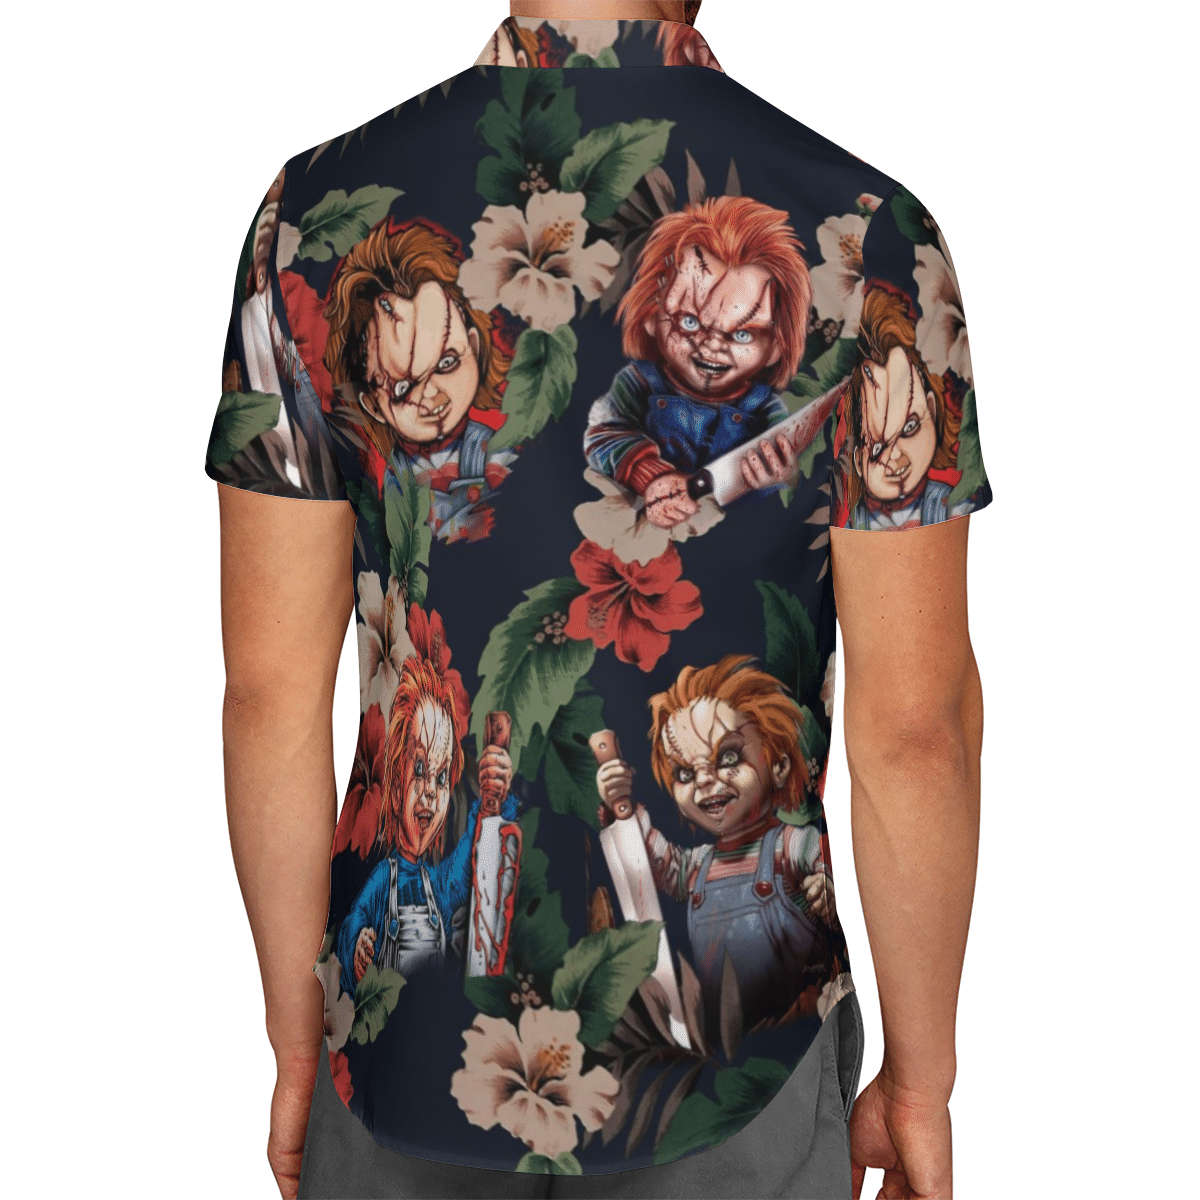 Chucky Hawaii shirt and short 2